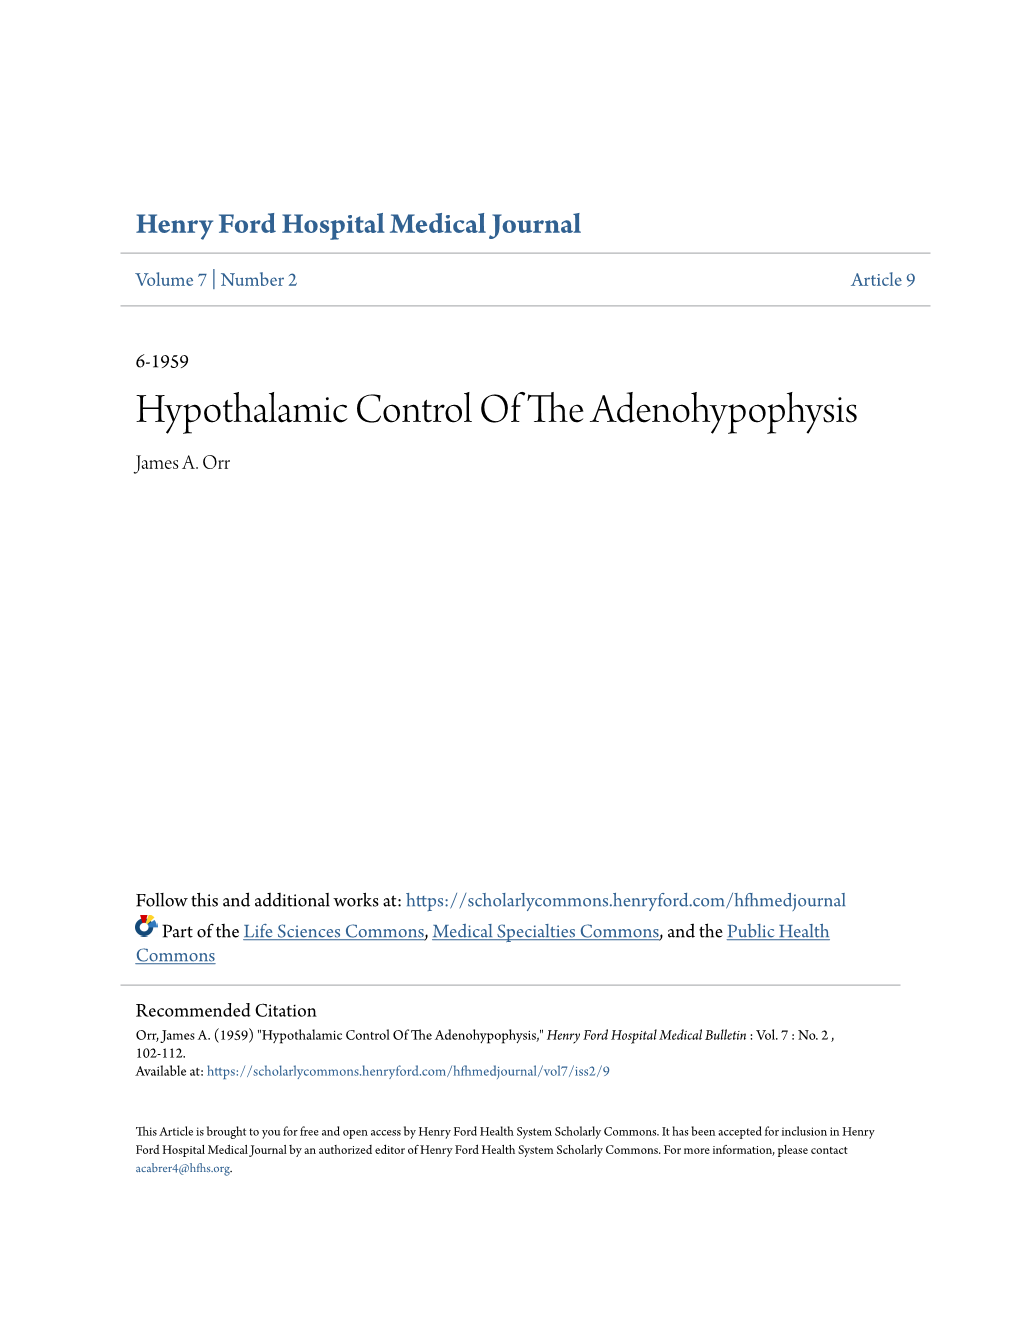 Hypothalamic Control of the Adenohypophysis James A